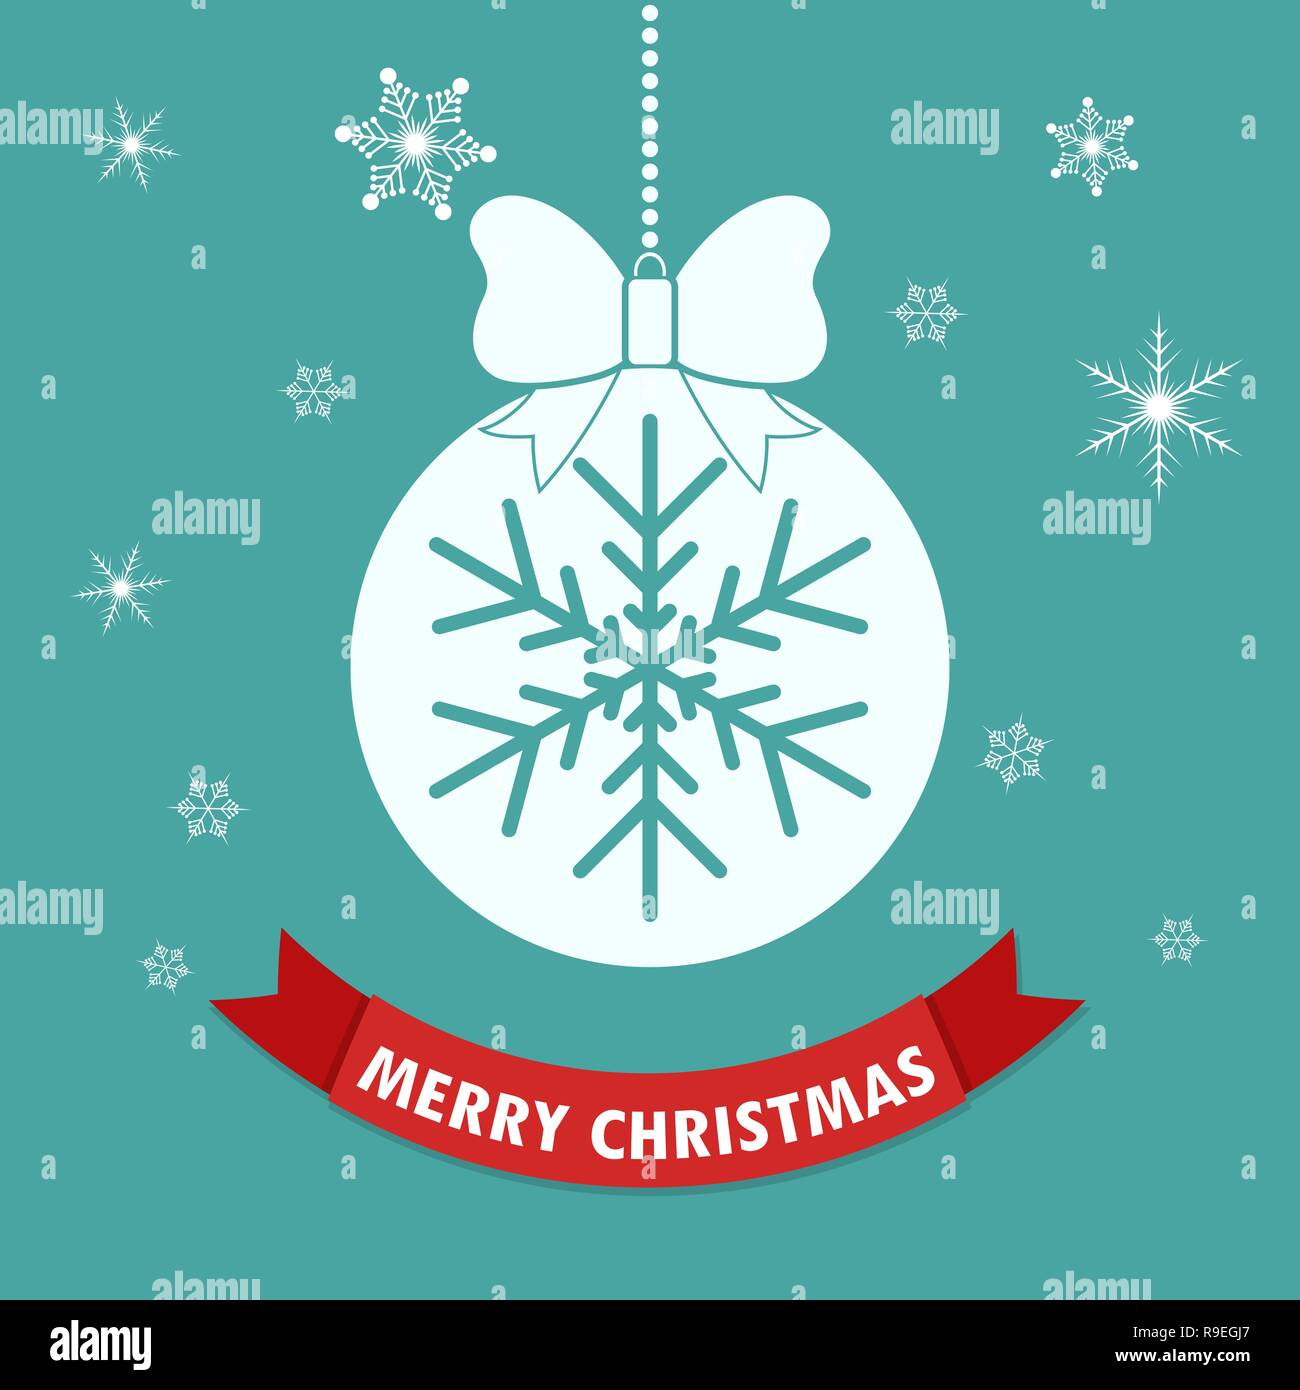 Christmas greeting card with abstract Christmas ball. Vector illustration. Hanging Christmas ball with snowflakes and red ribbon Stock Vector